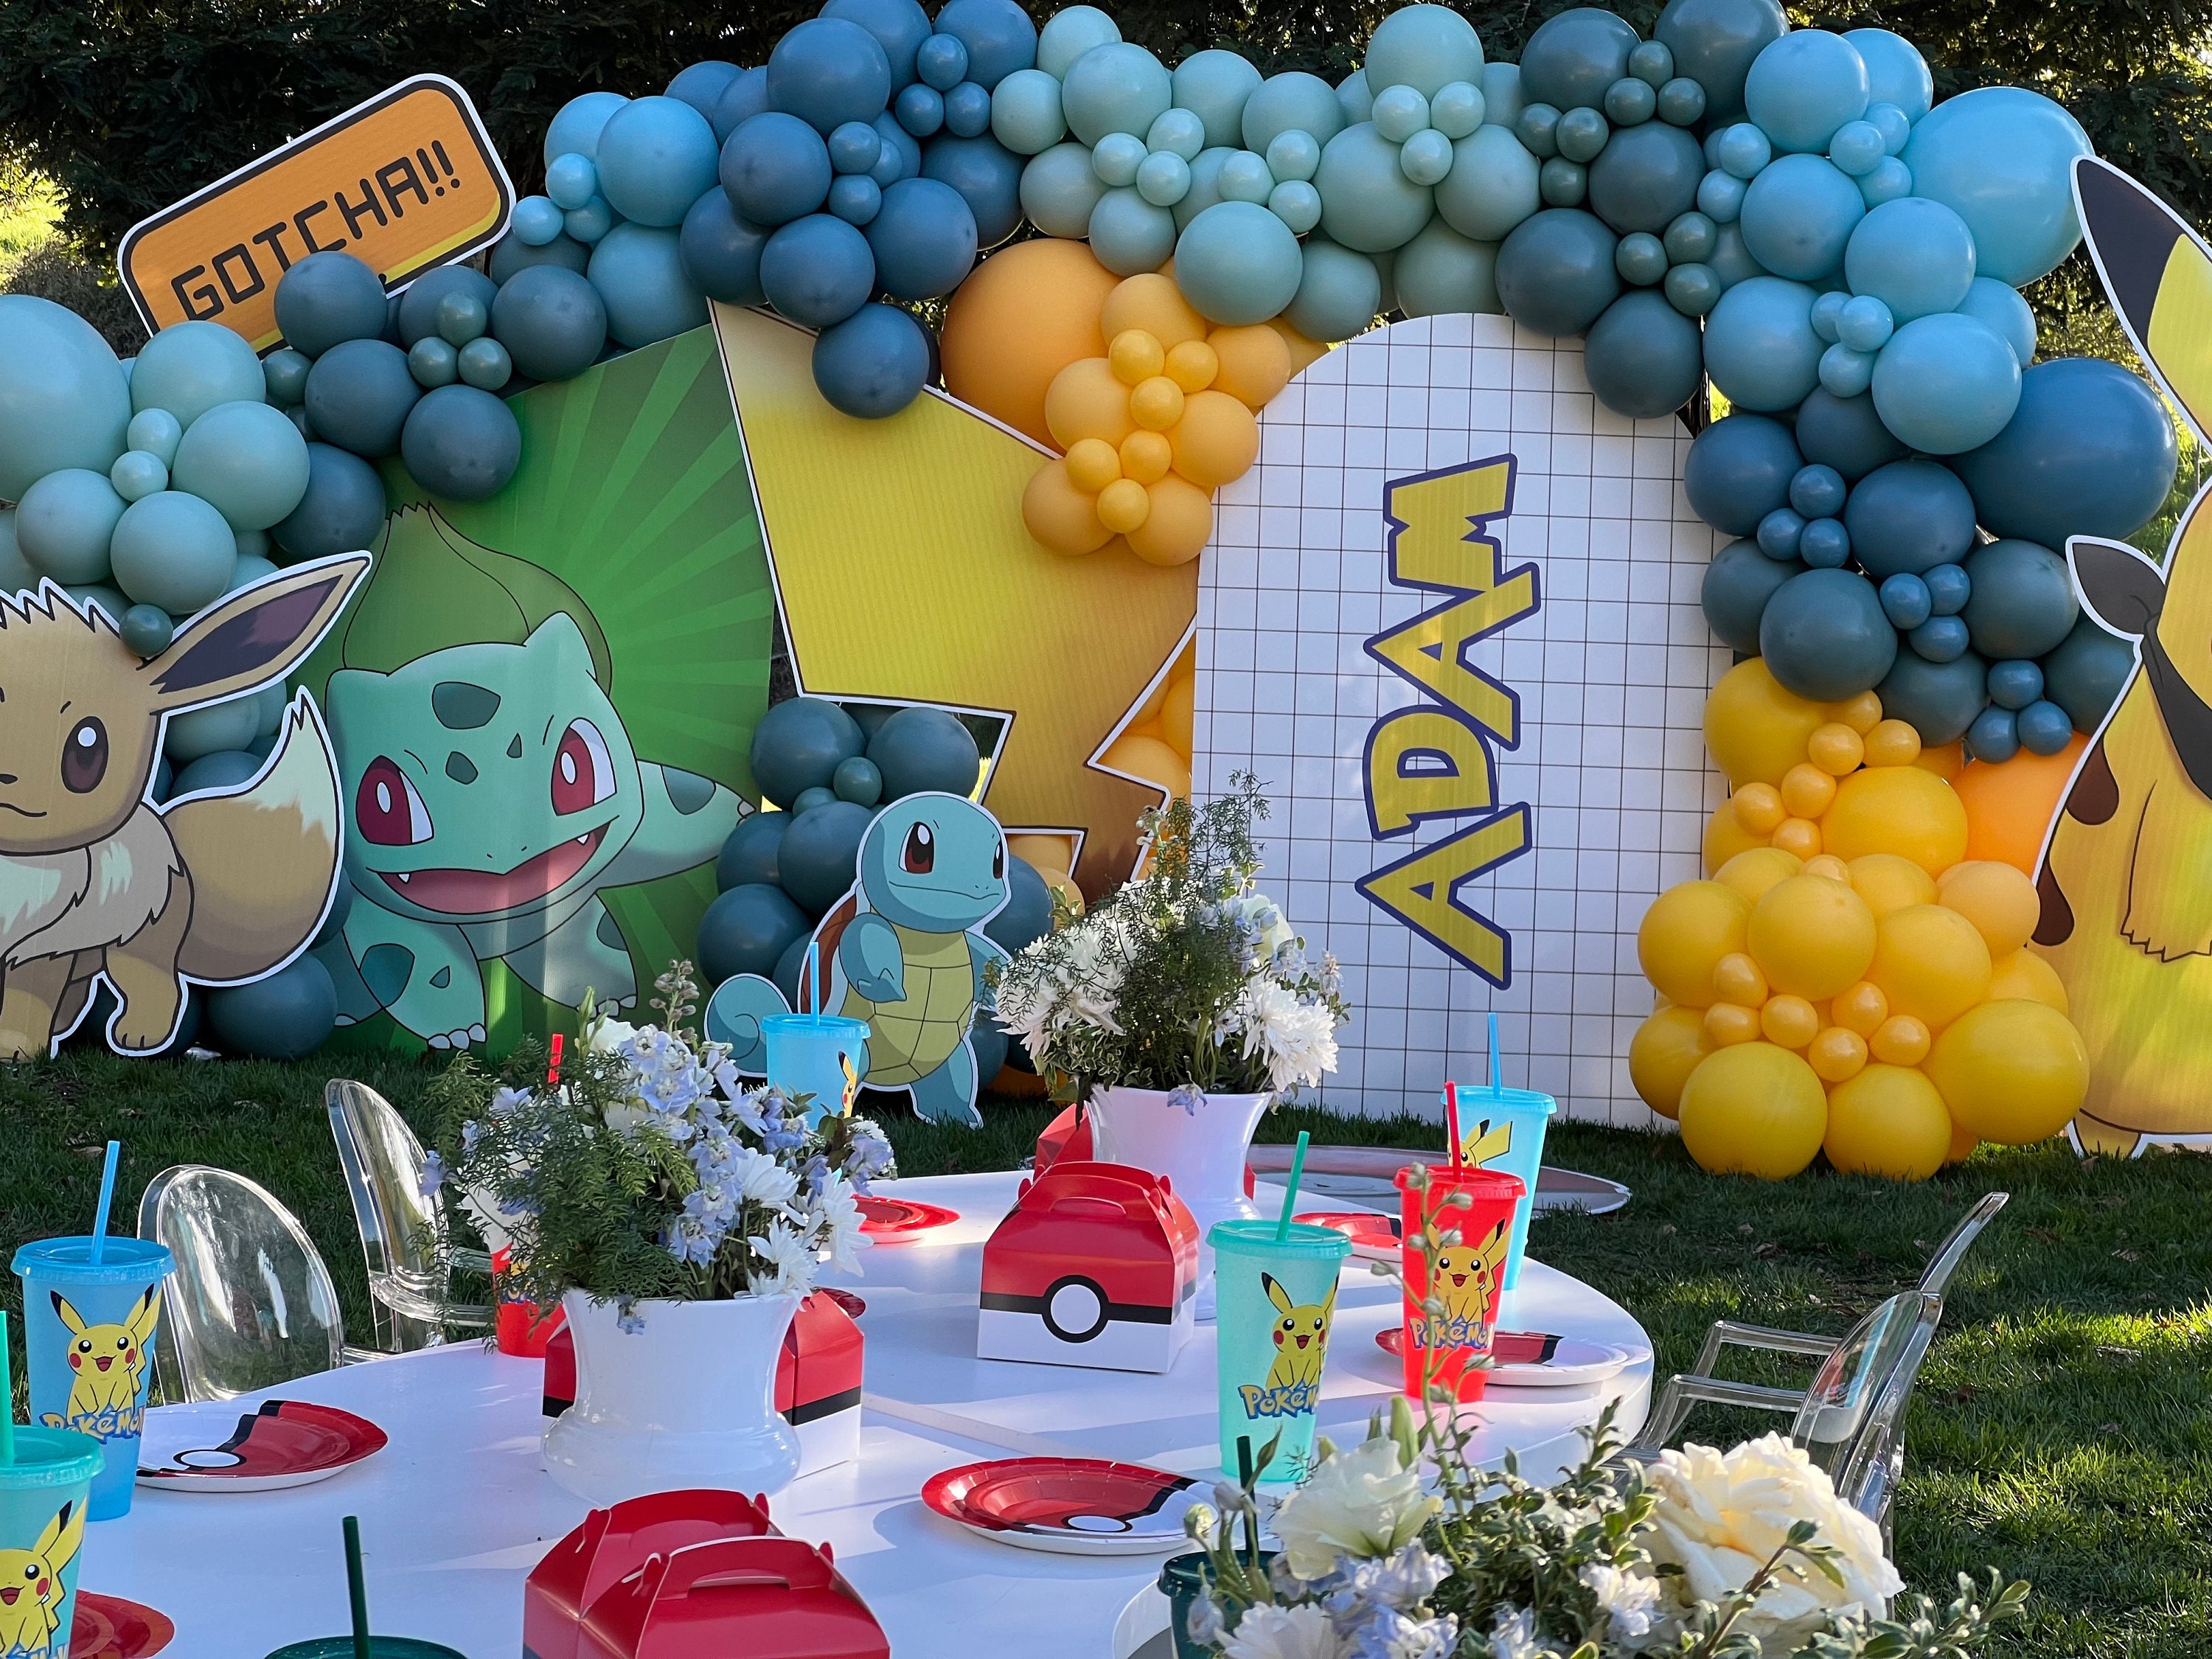 Children Party Decoration Pokemon